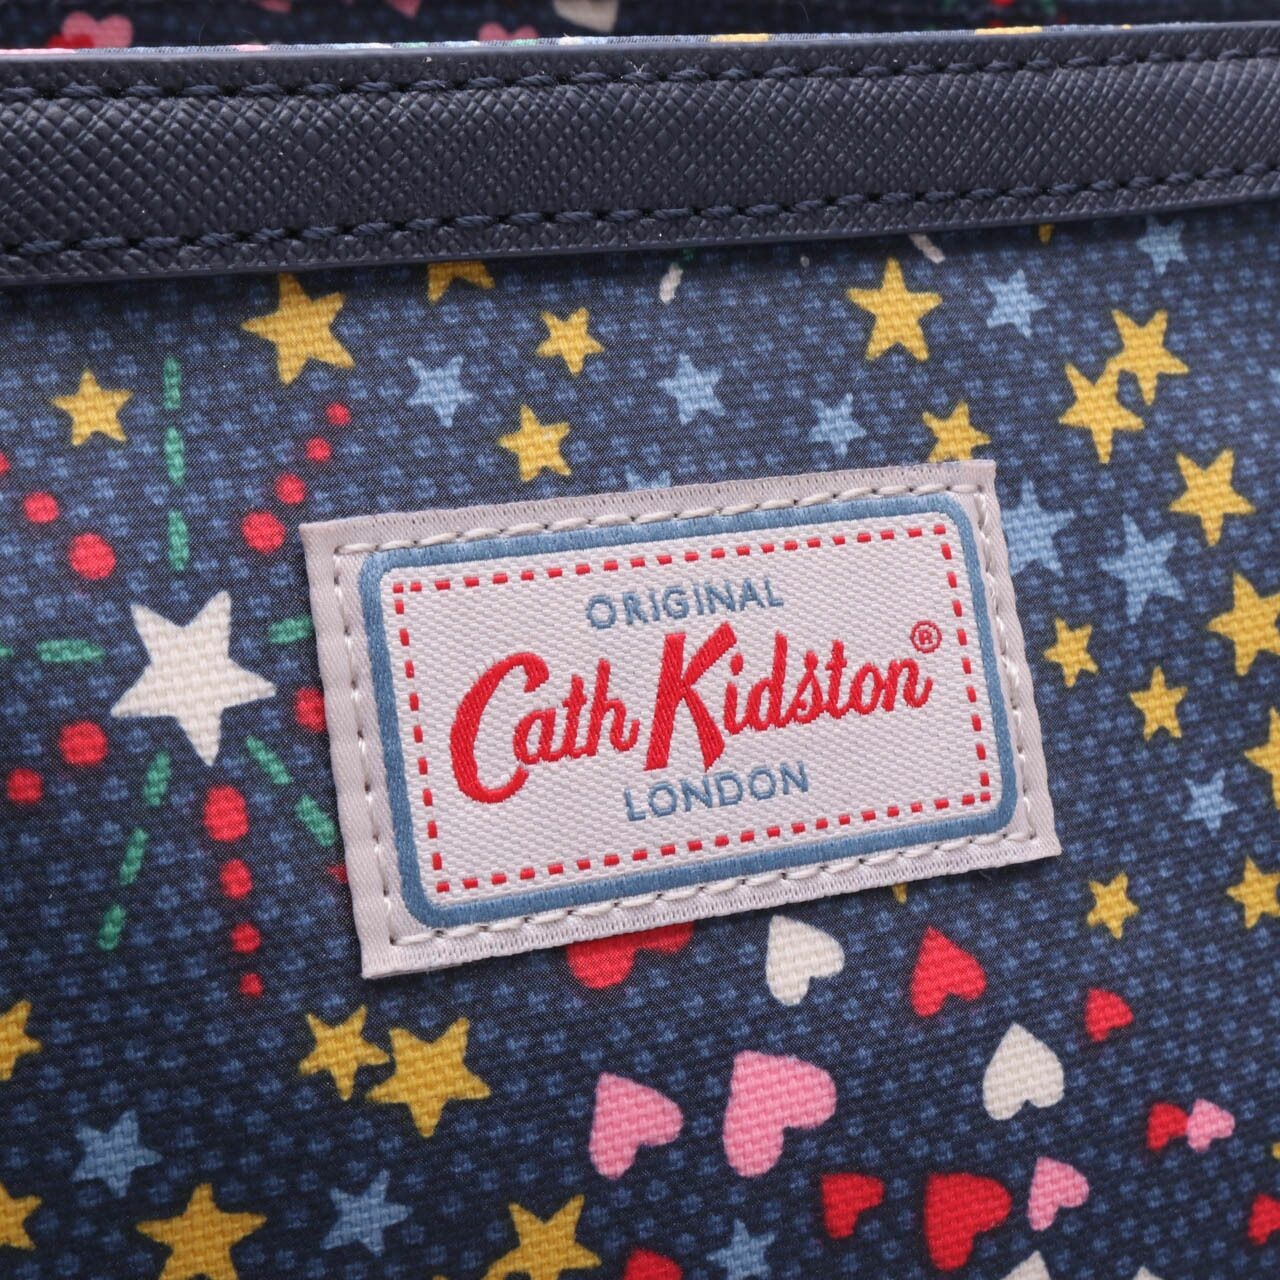 Cath Kidston Navy Patterned Love Tote Bag